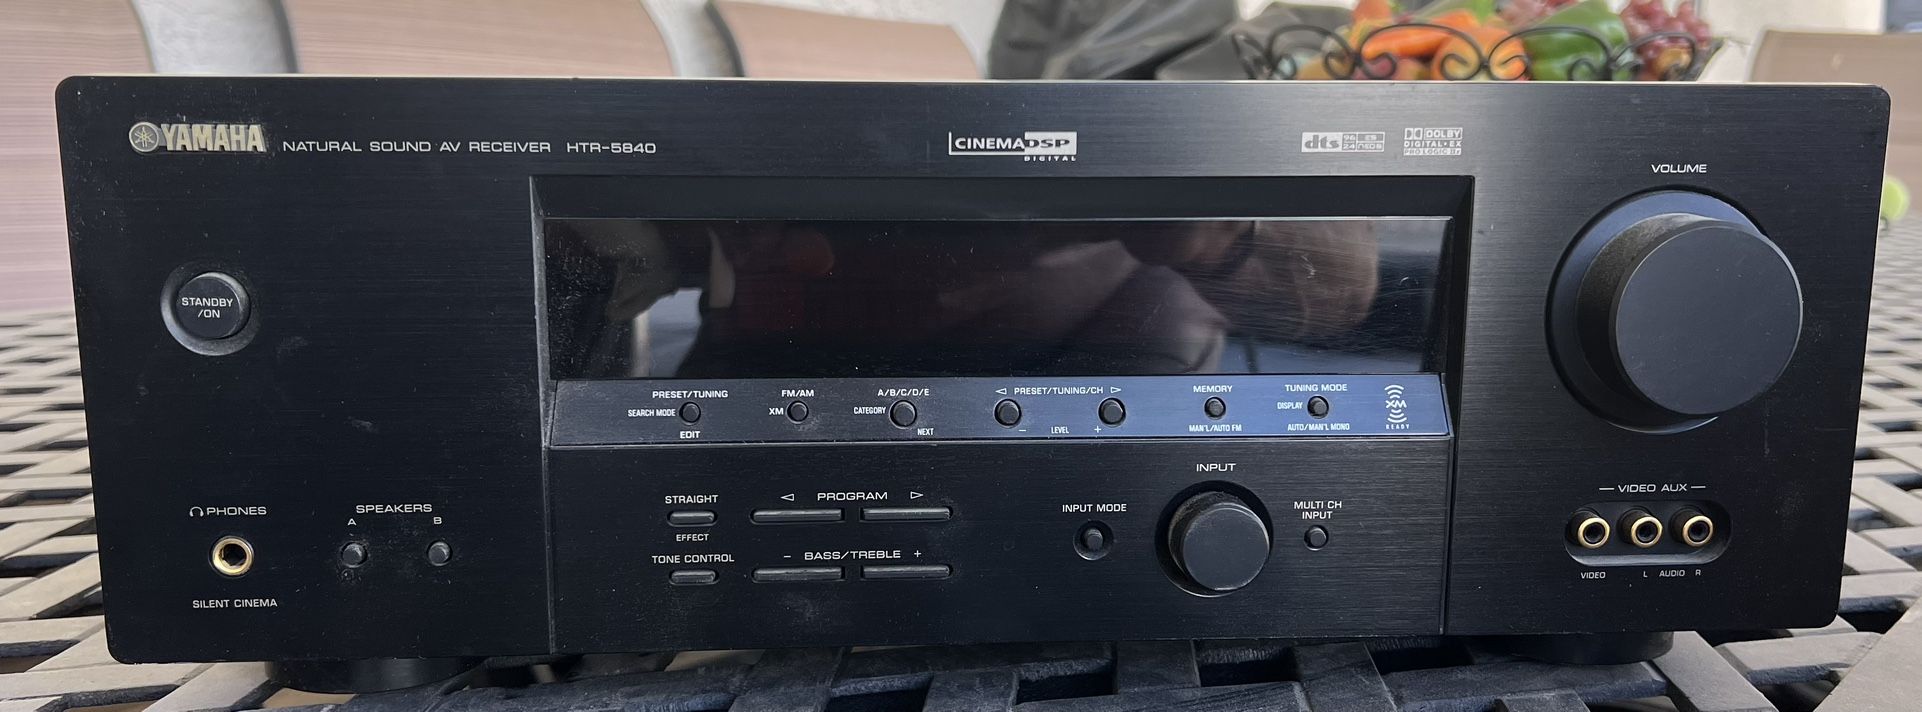 Yamaha Natural Sound Av Receiver HTR-5840